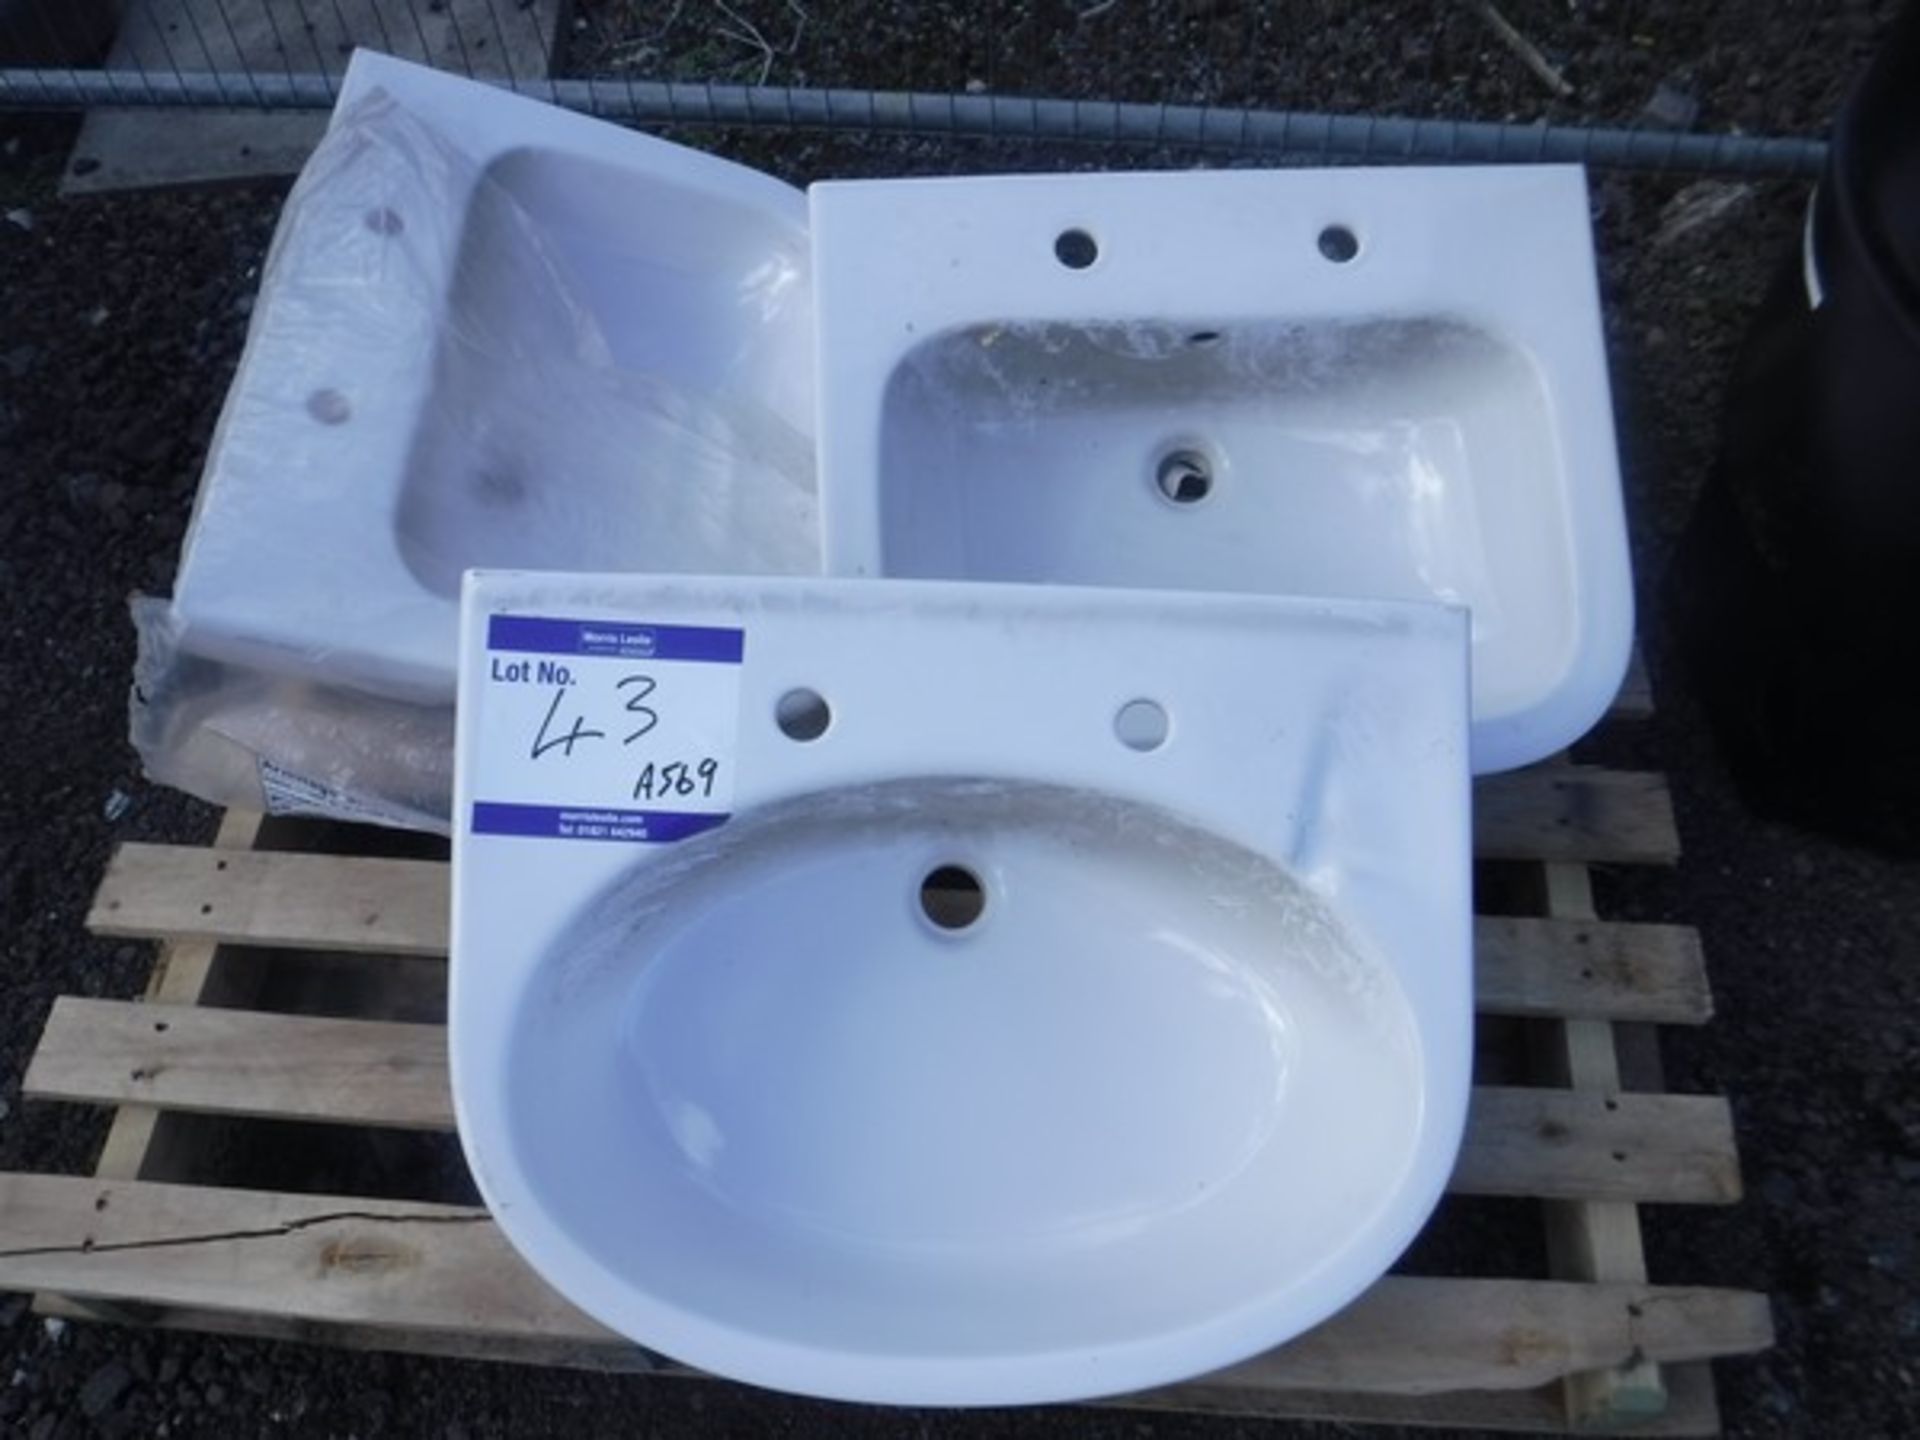 3 x white sinks, 3 x plastic 50 gallon tanks.